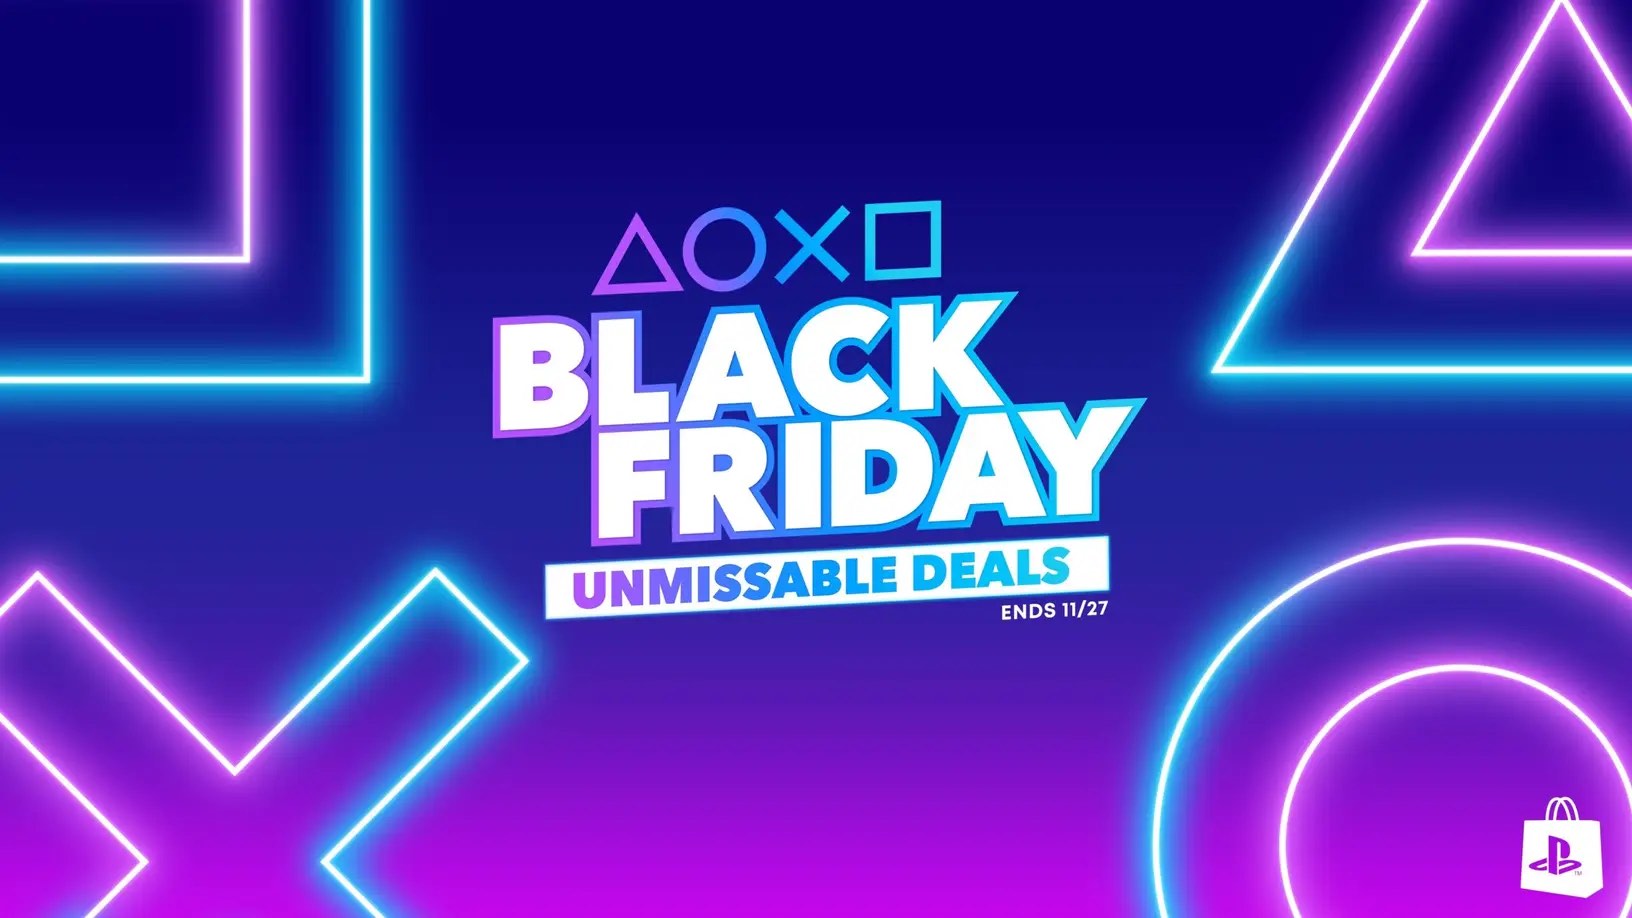 Best PlayStation Store Black Friday Deals (2023) – GameSkinny